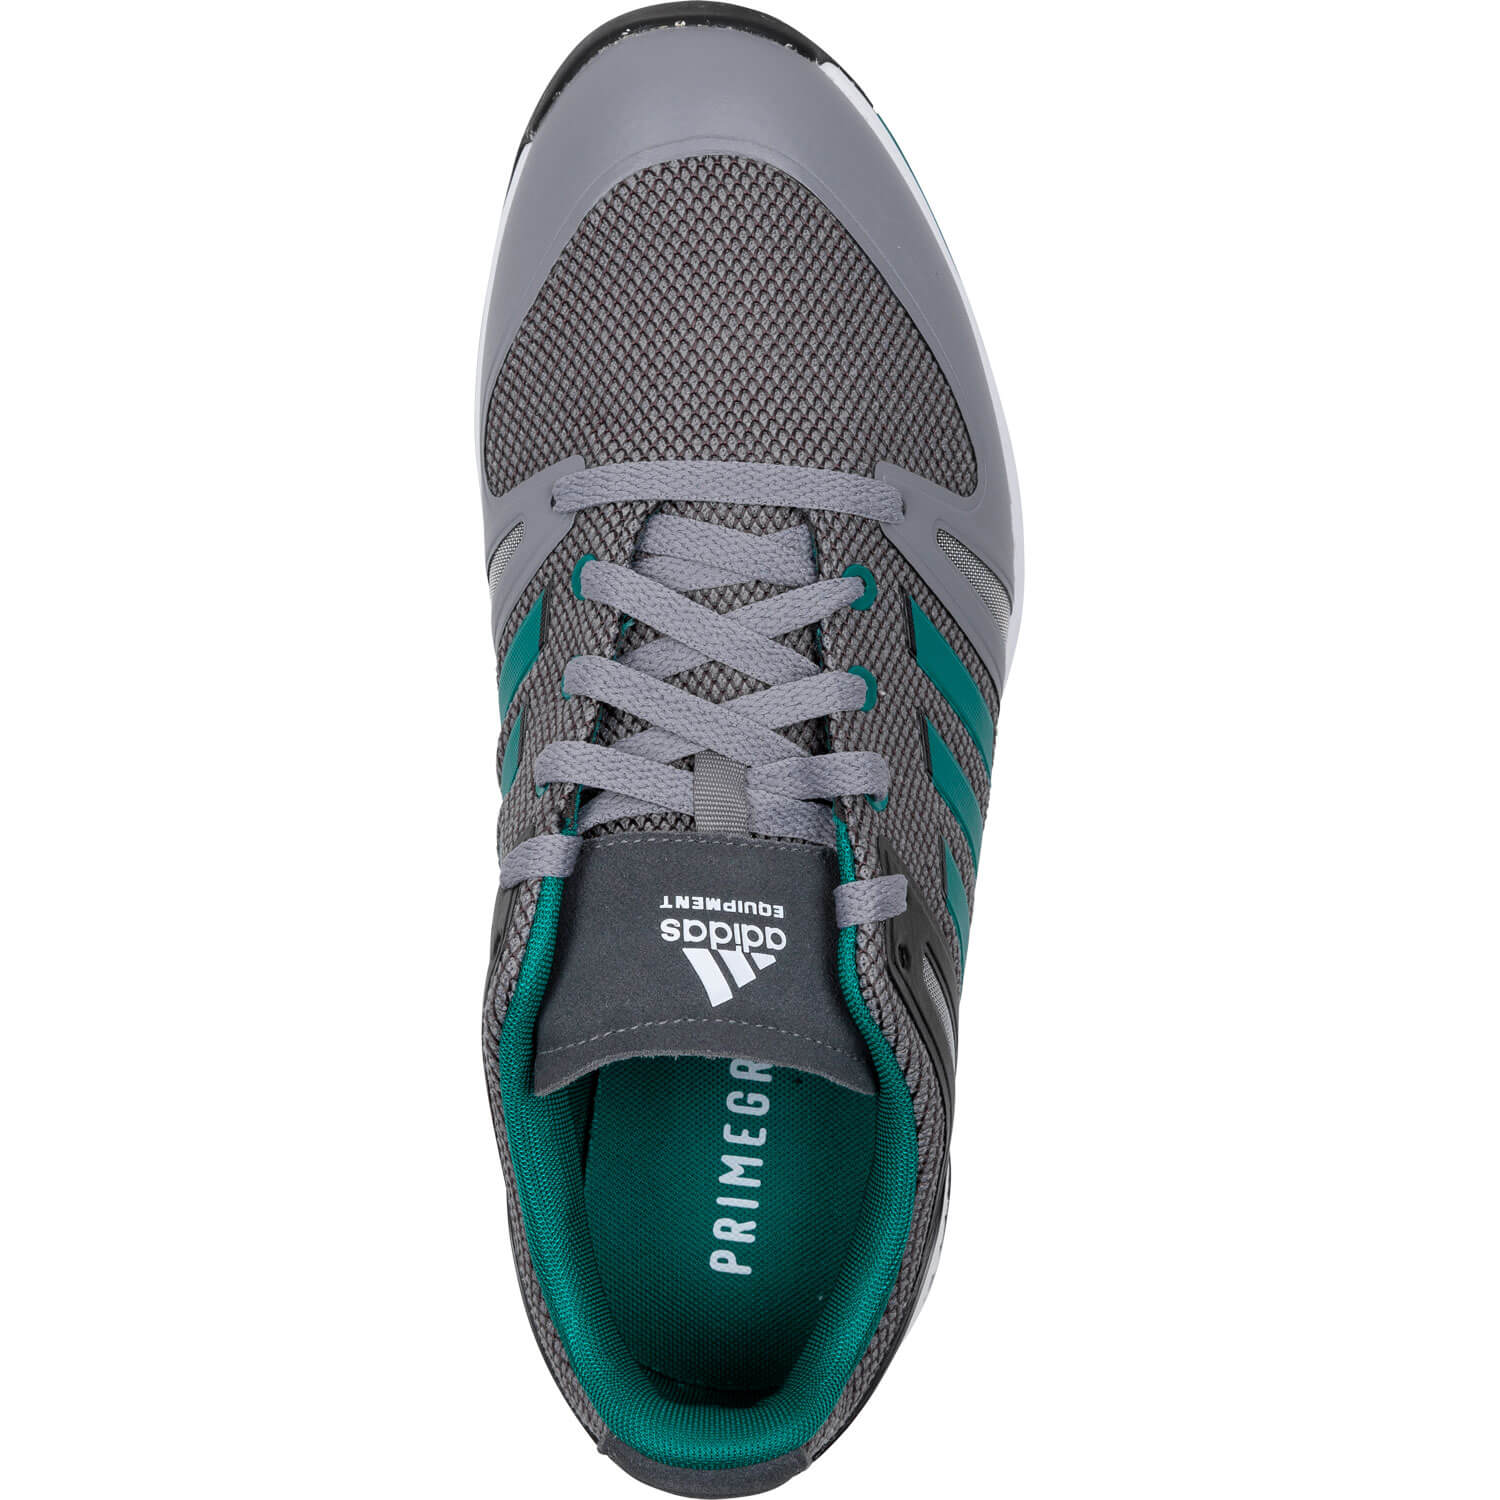 Adidas EQT SL Grey/Black/Green Herren